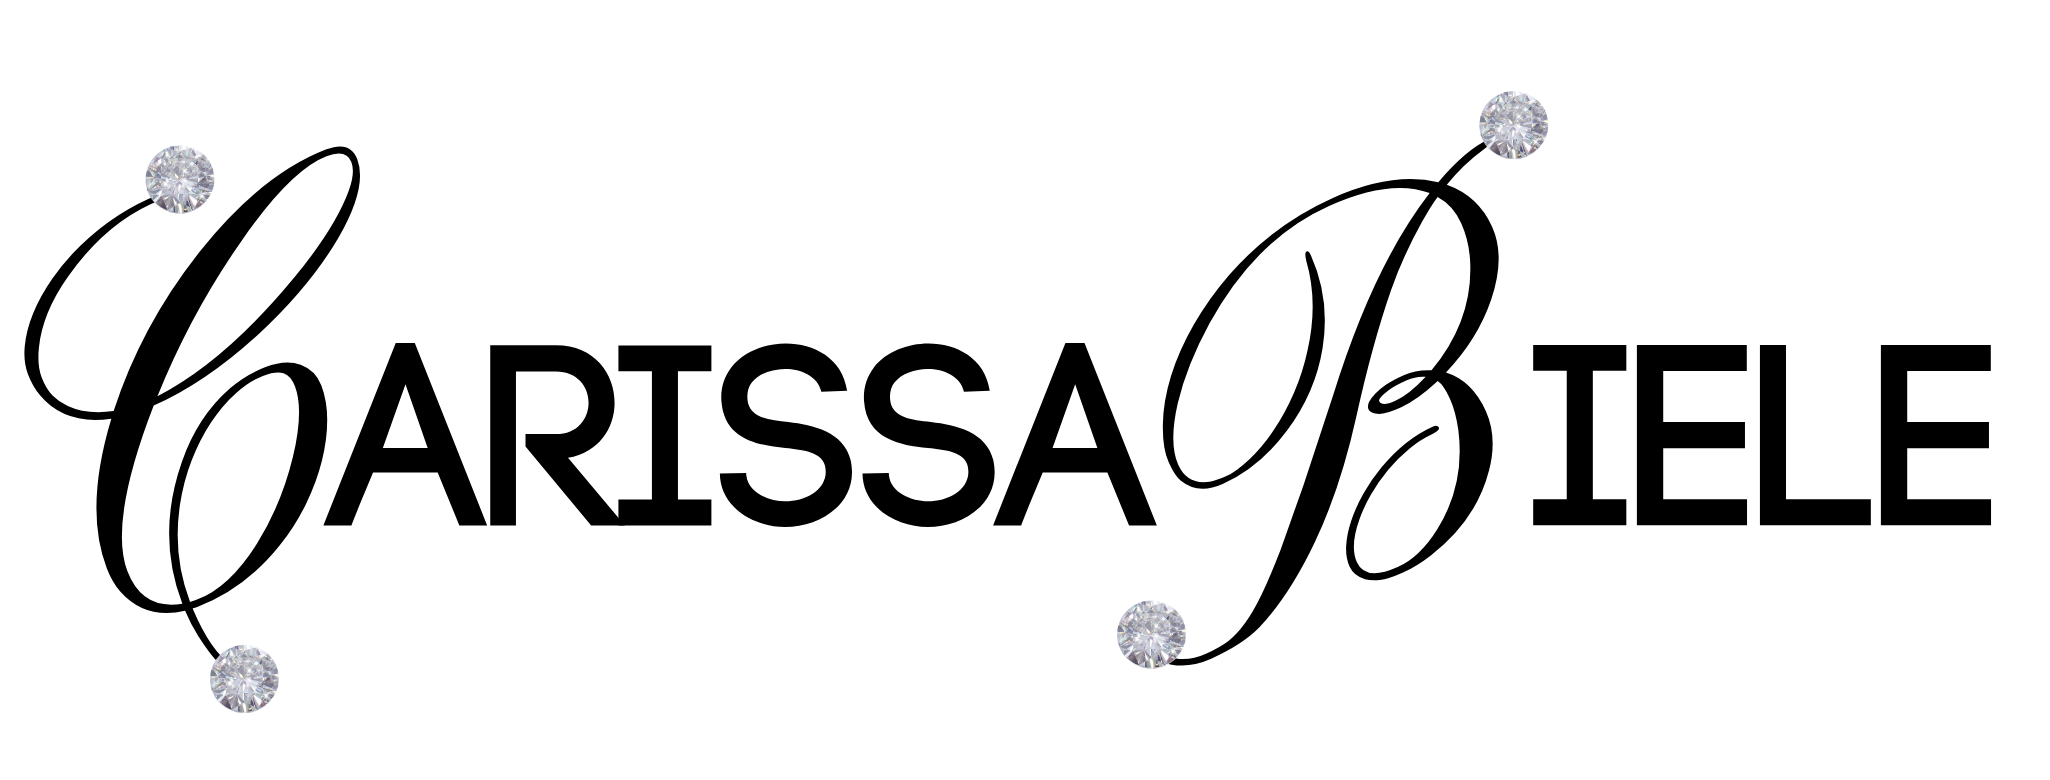 Carissa Biele Entertainment, LLC